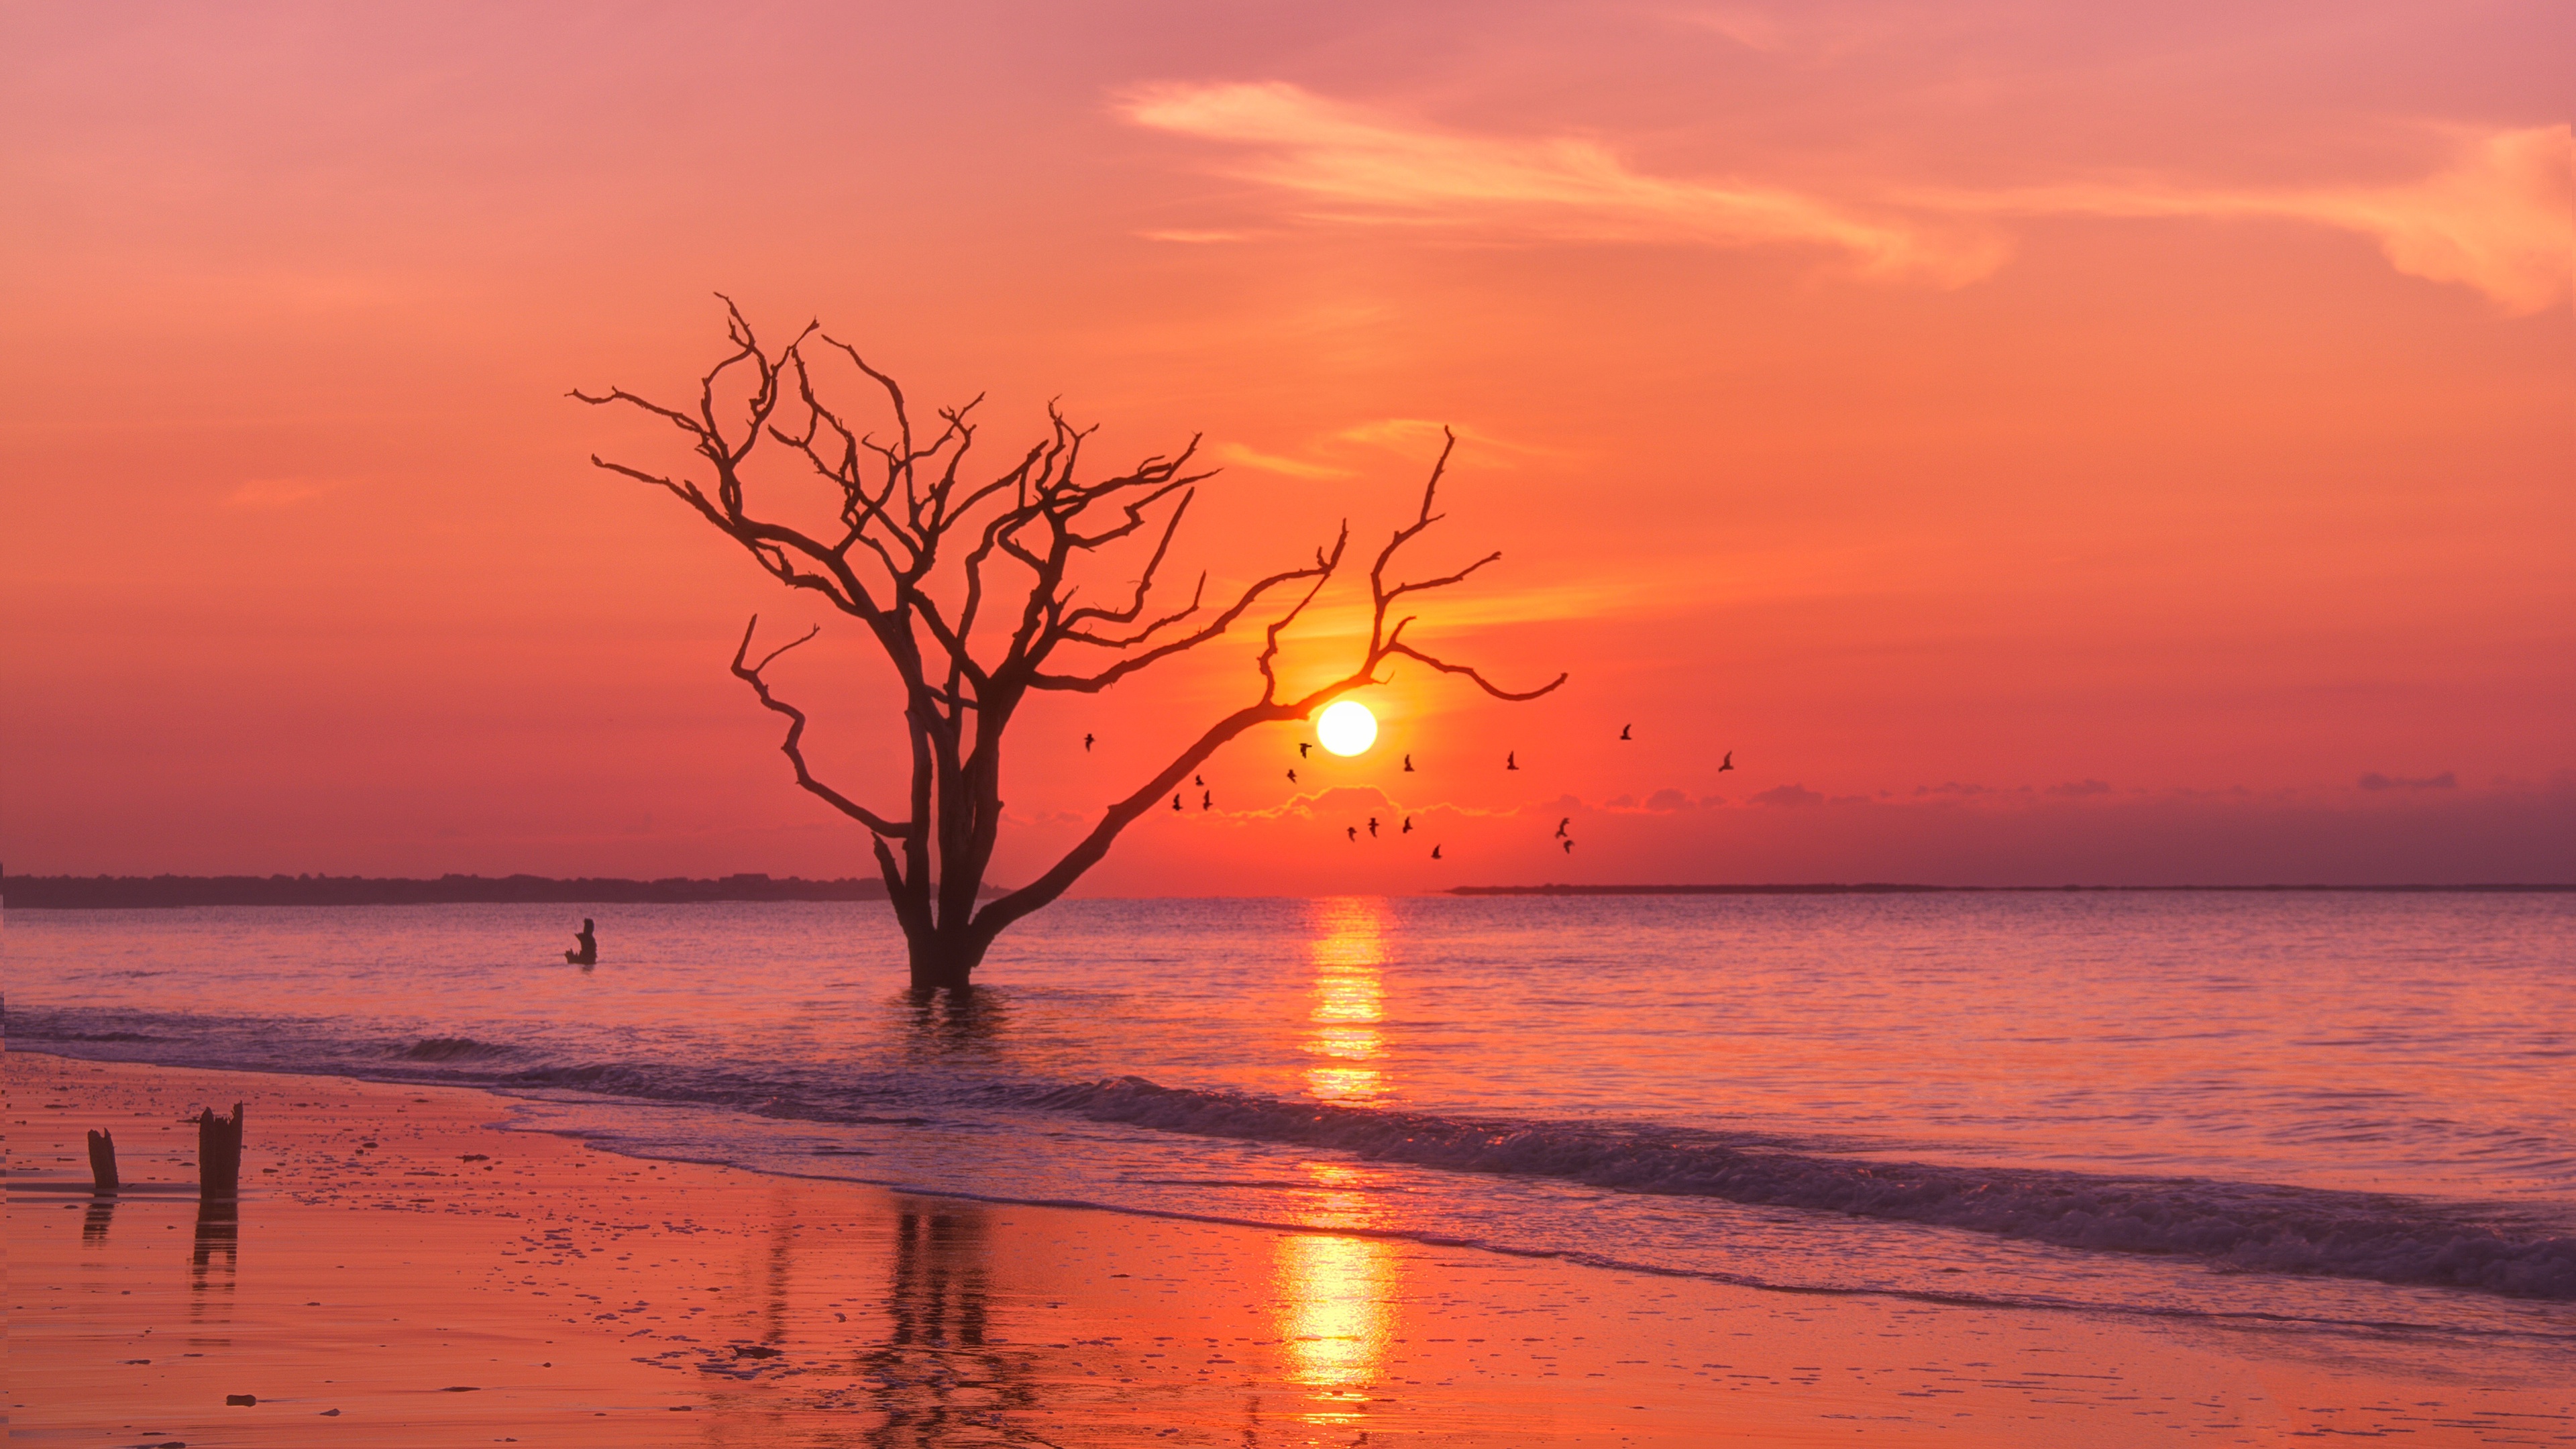 Бесплатное фото Дерево растет в море на берегу